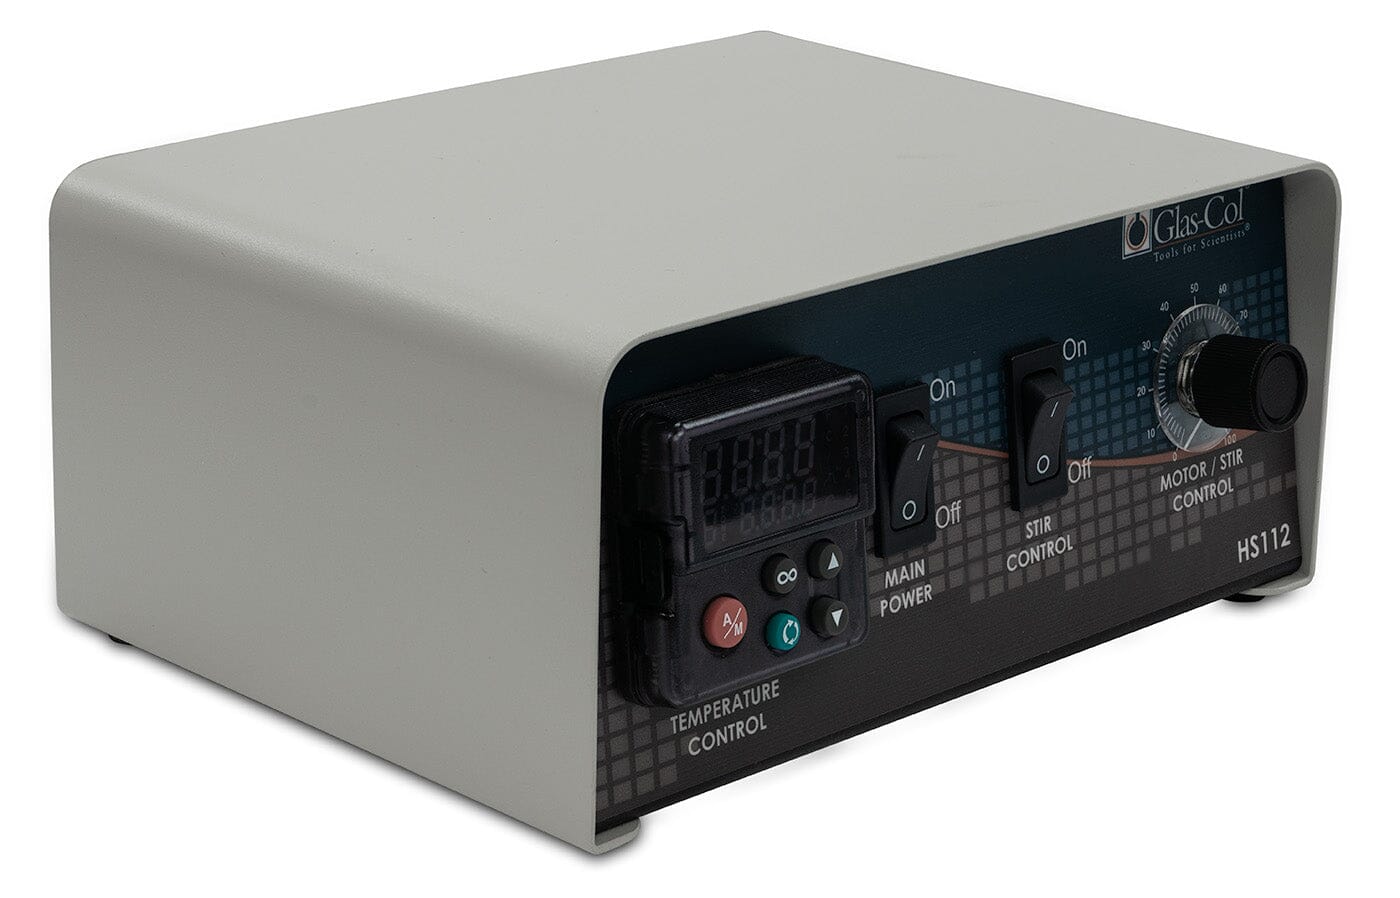 Glas-Col Digital Temperature Controller Input 2400W, 120V w/Stir Motor Ctrl Shop All Categories Glas-Col 